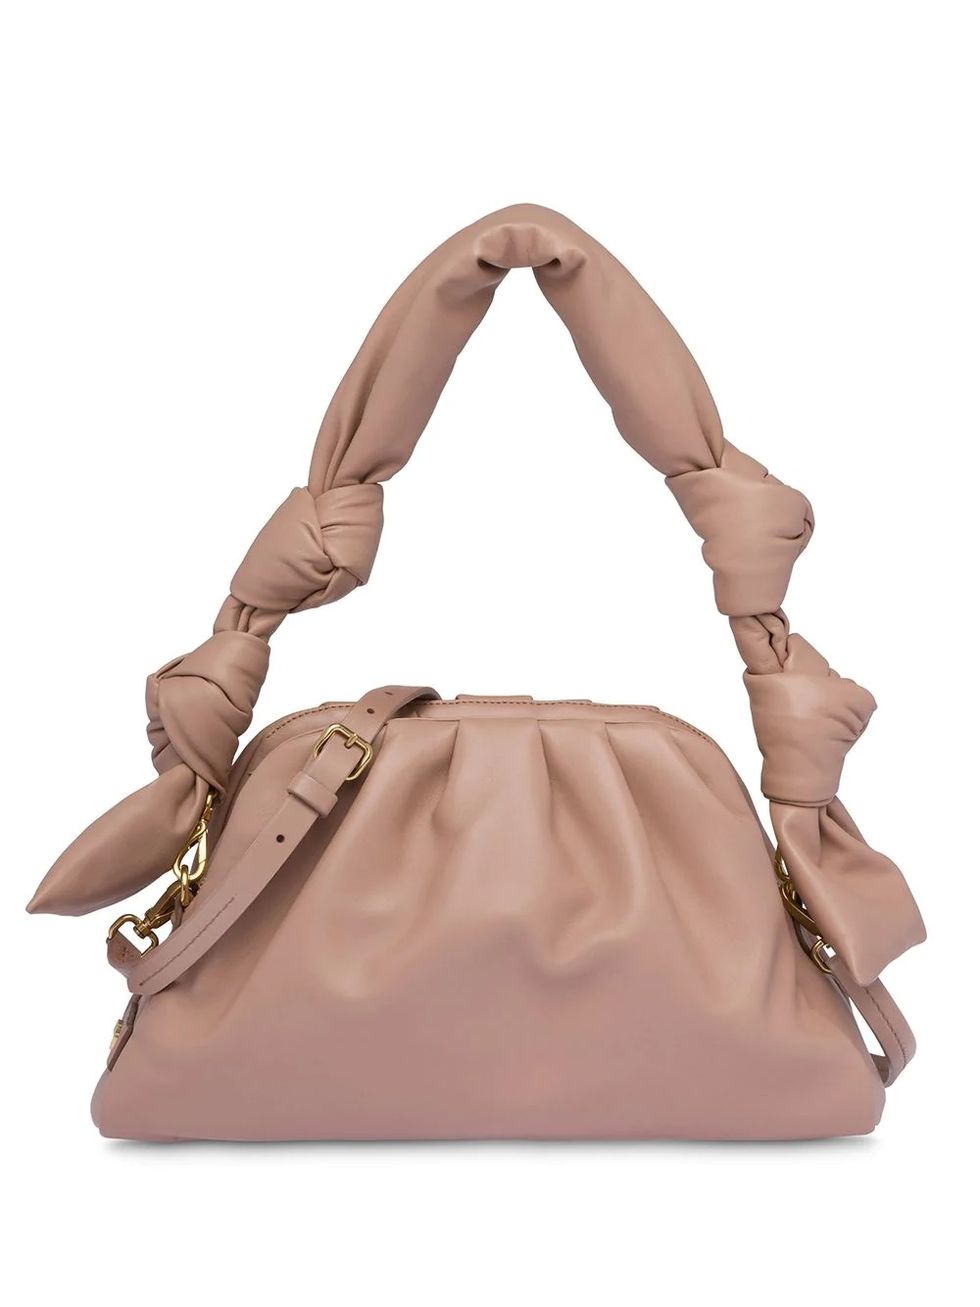 Handbag, Bag, Shoulder bag, Fashion accessory, Brown, Beige, Tan, Leather, Hobo bag, Peach, 